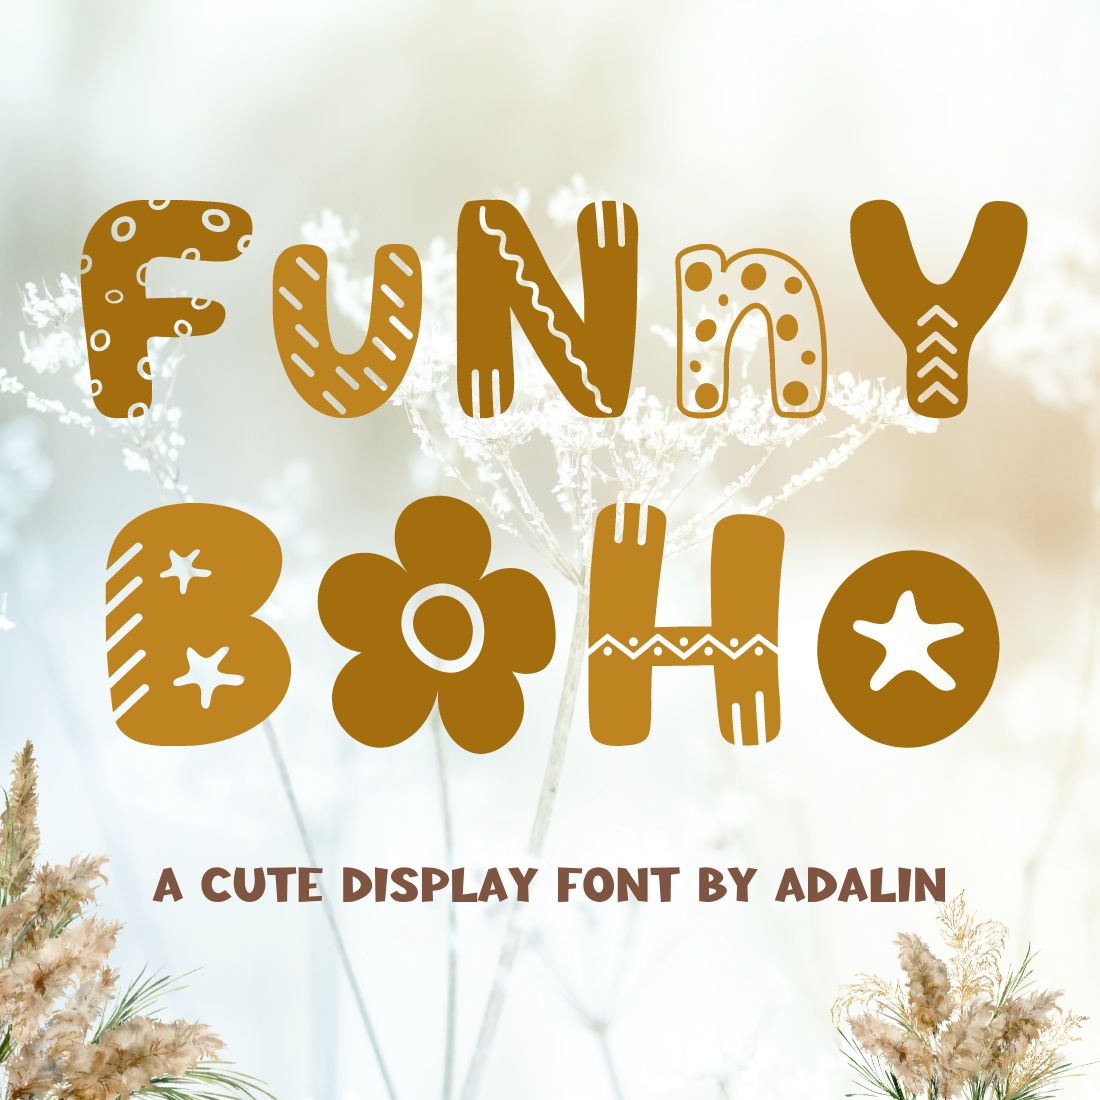 Funny Boho - Display Font cover image.